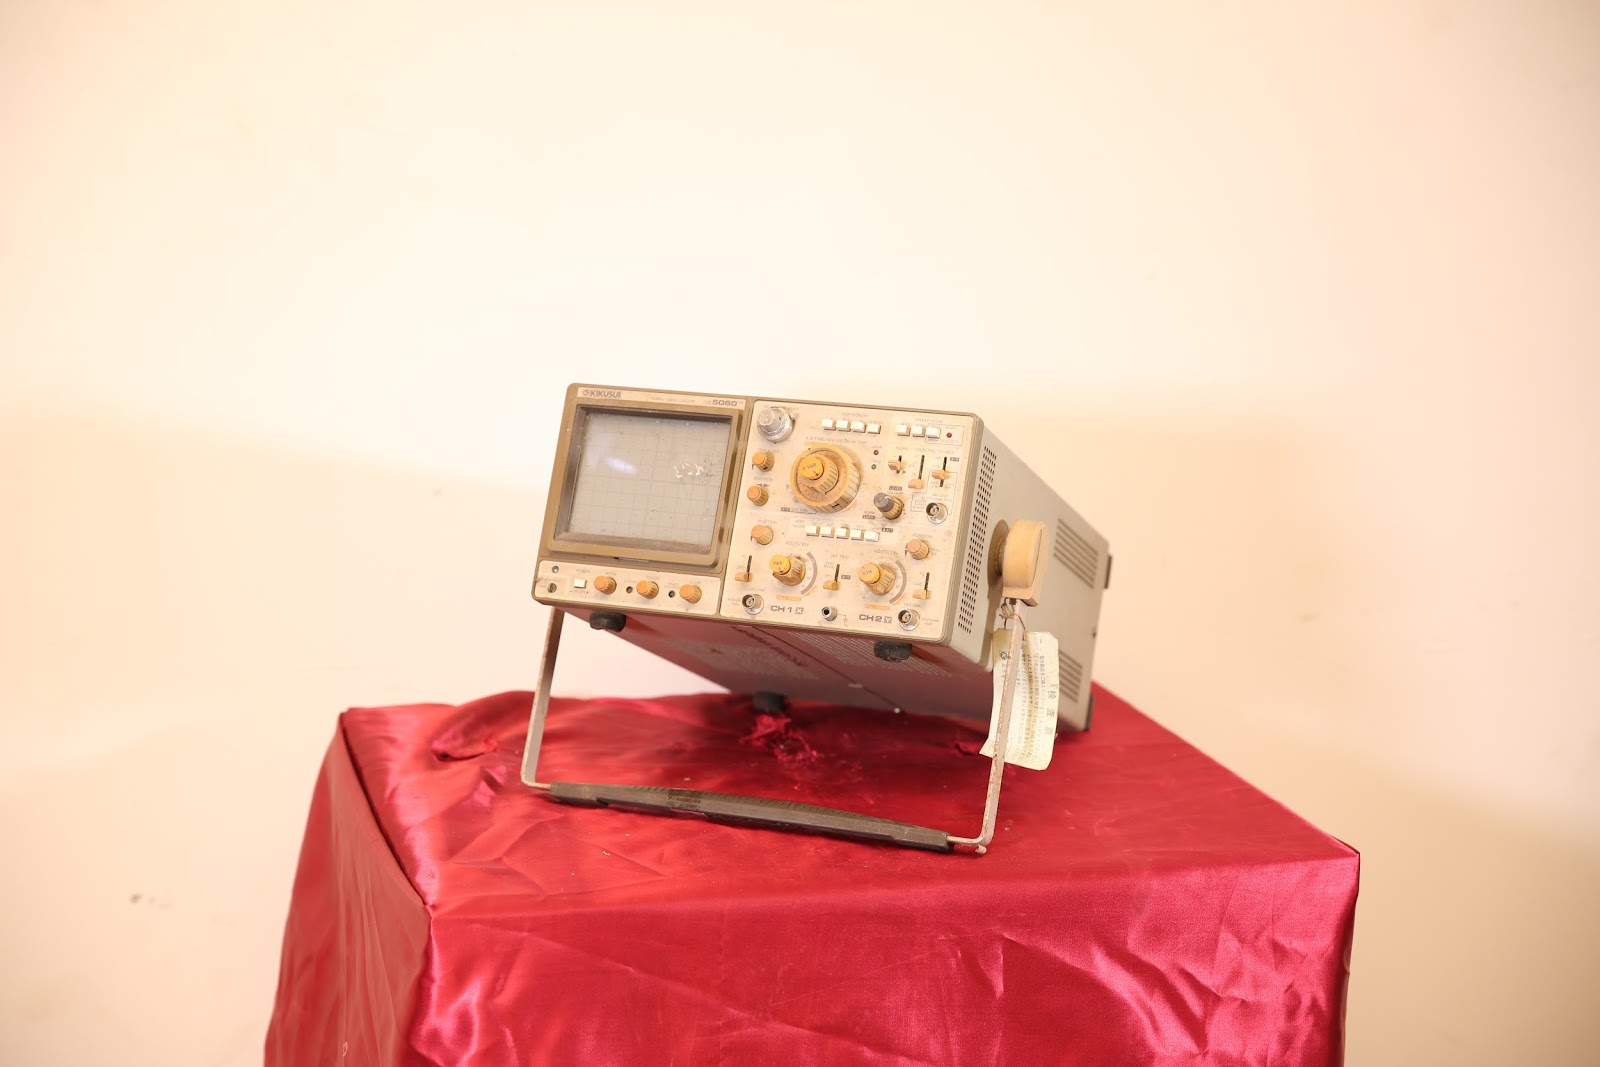 Kikusui Oscilloscope - COS5060 (1985)